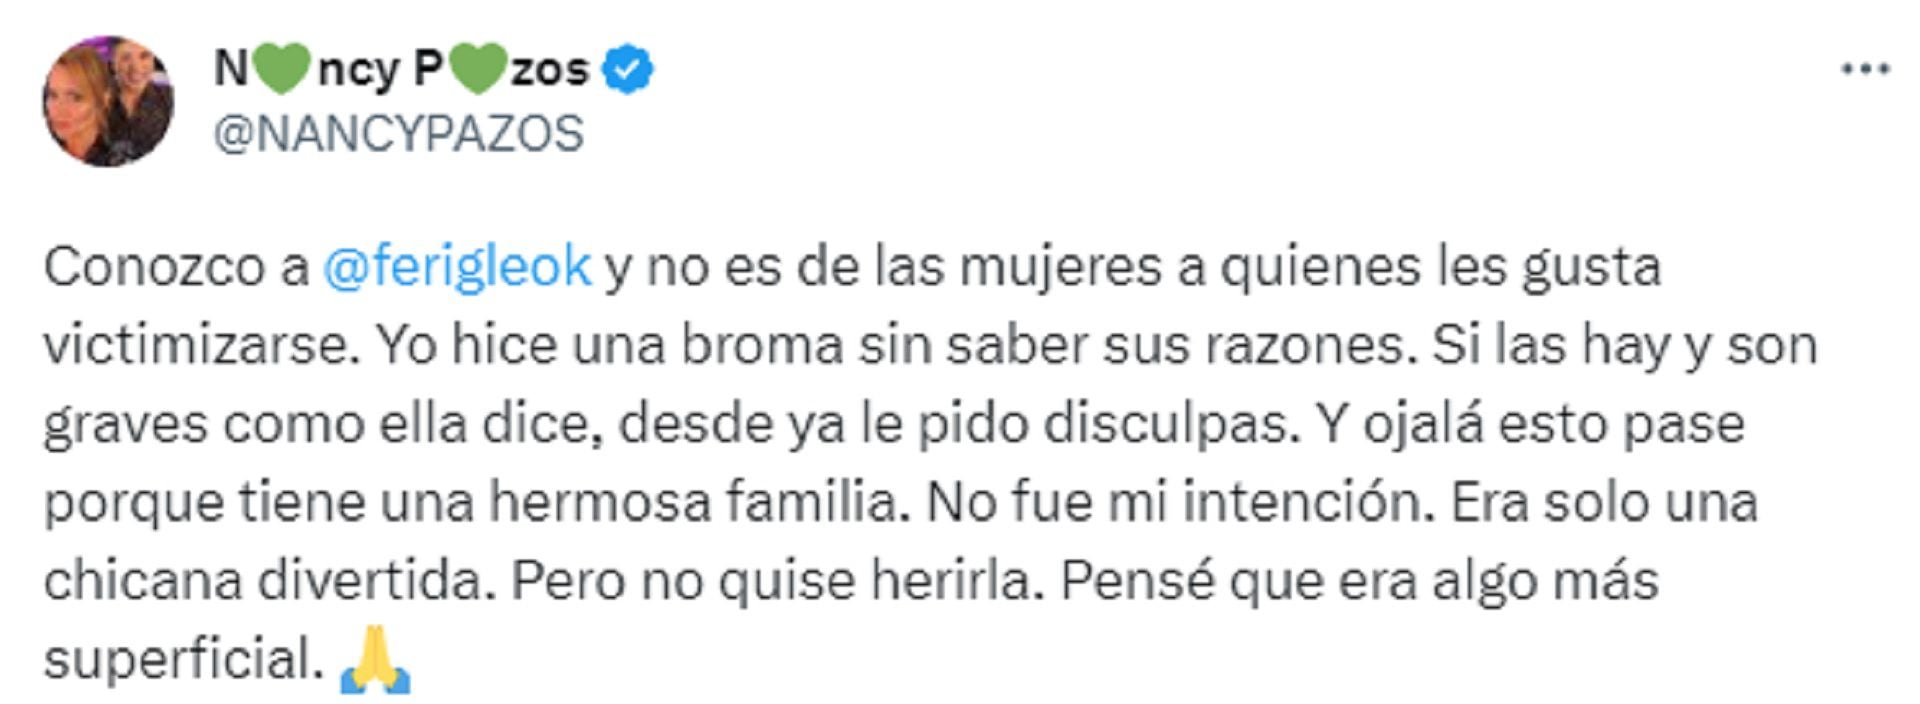 El pedido de disculpas de Nancy Pazos a Fernanda Iglesias